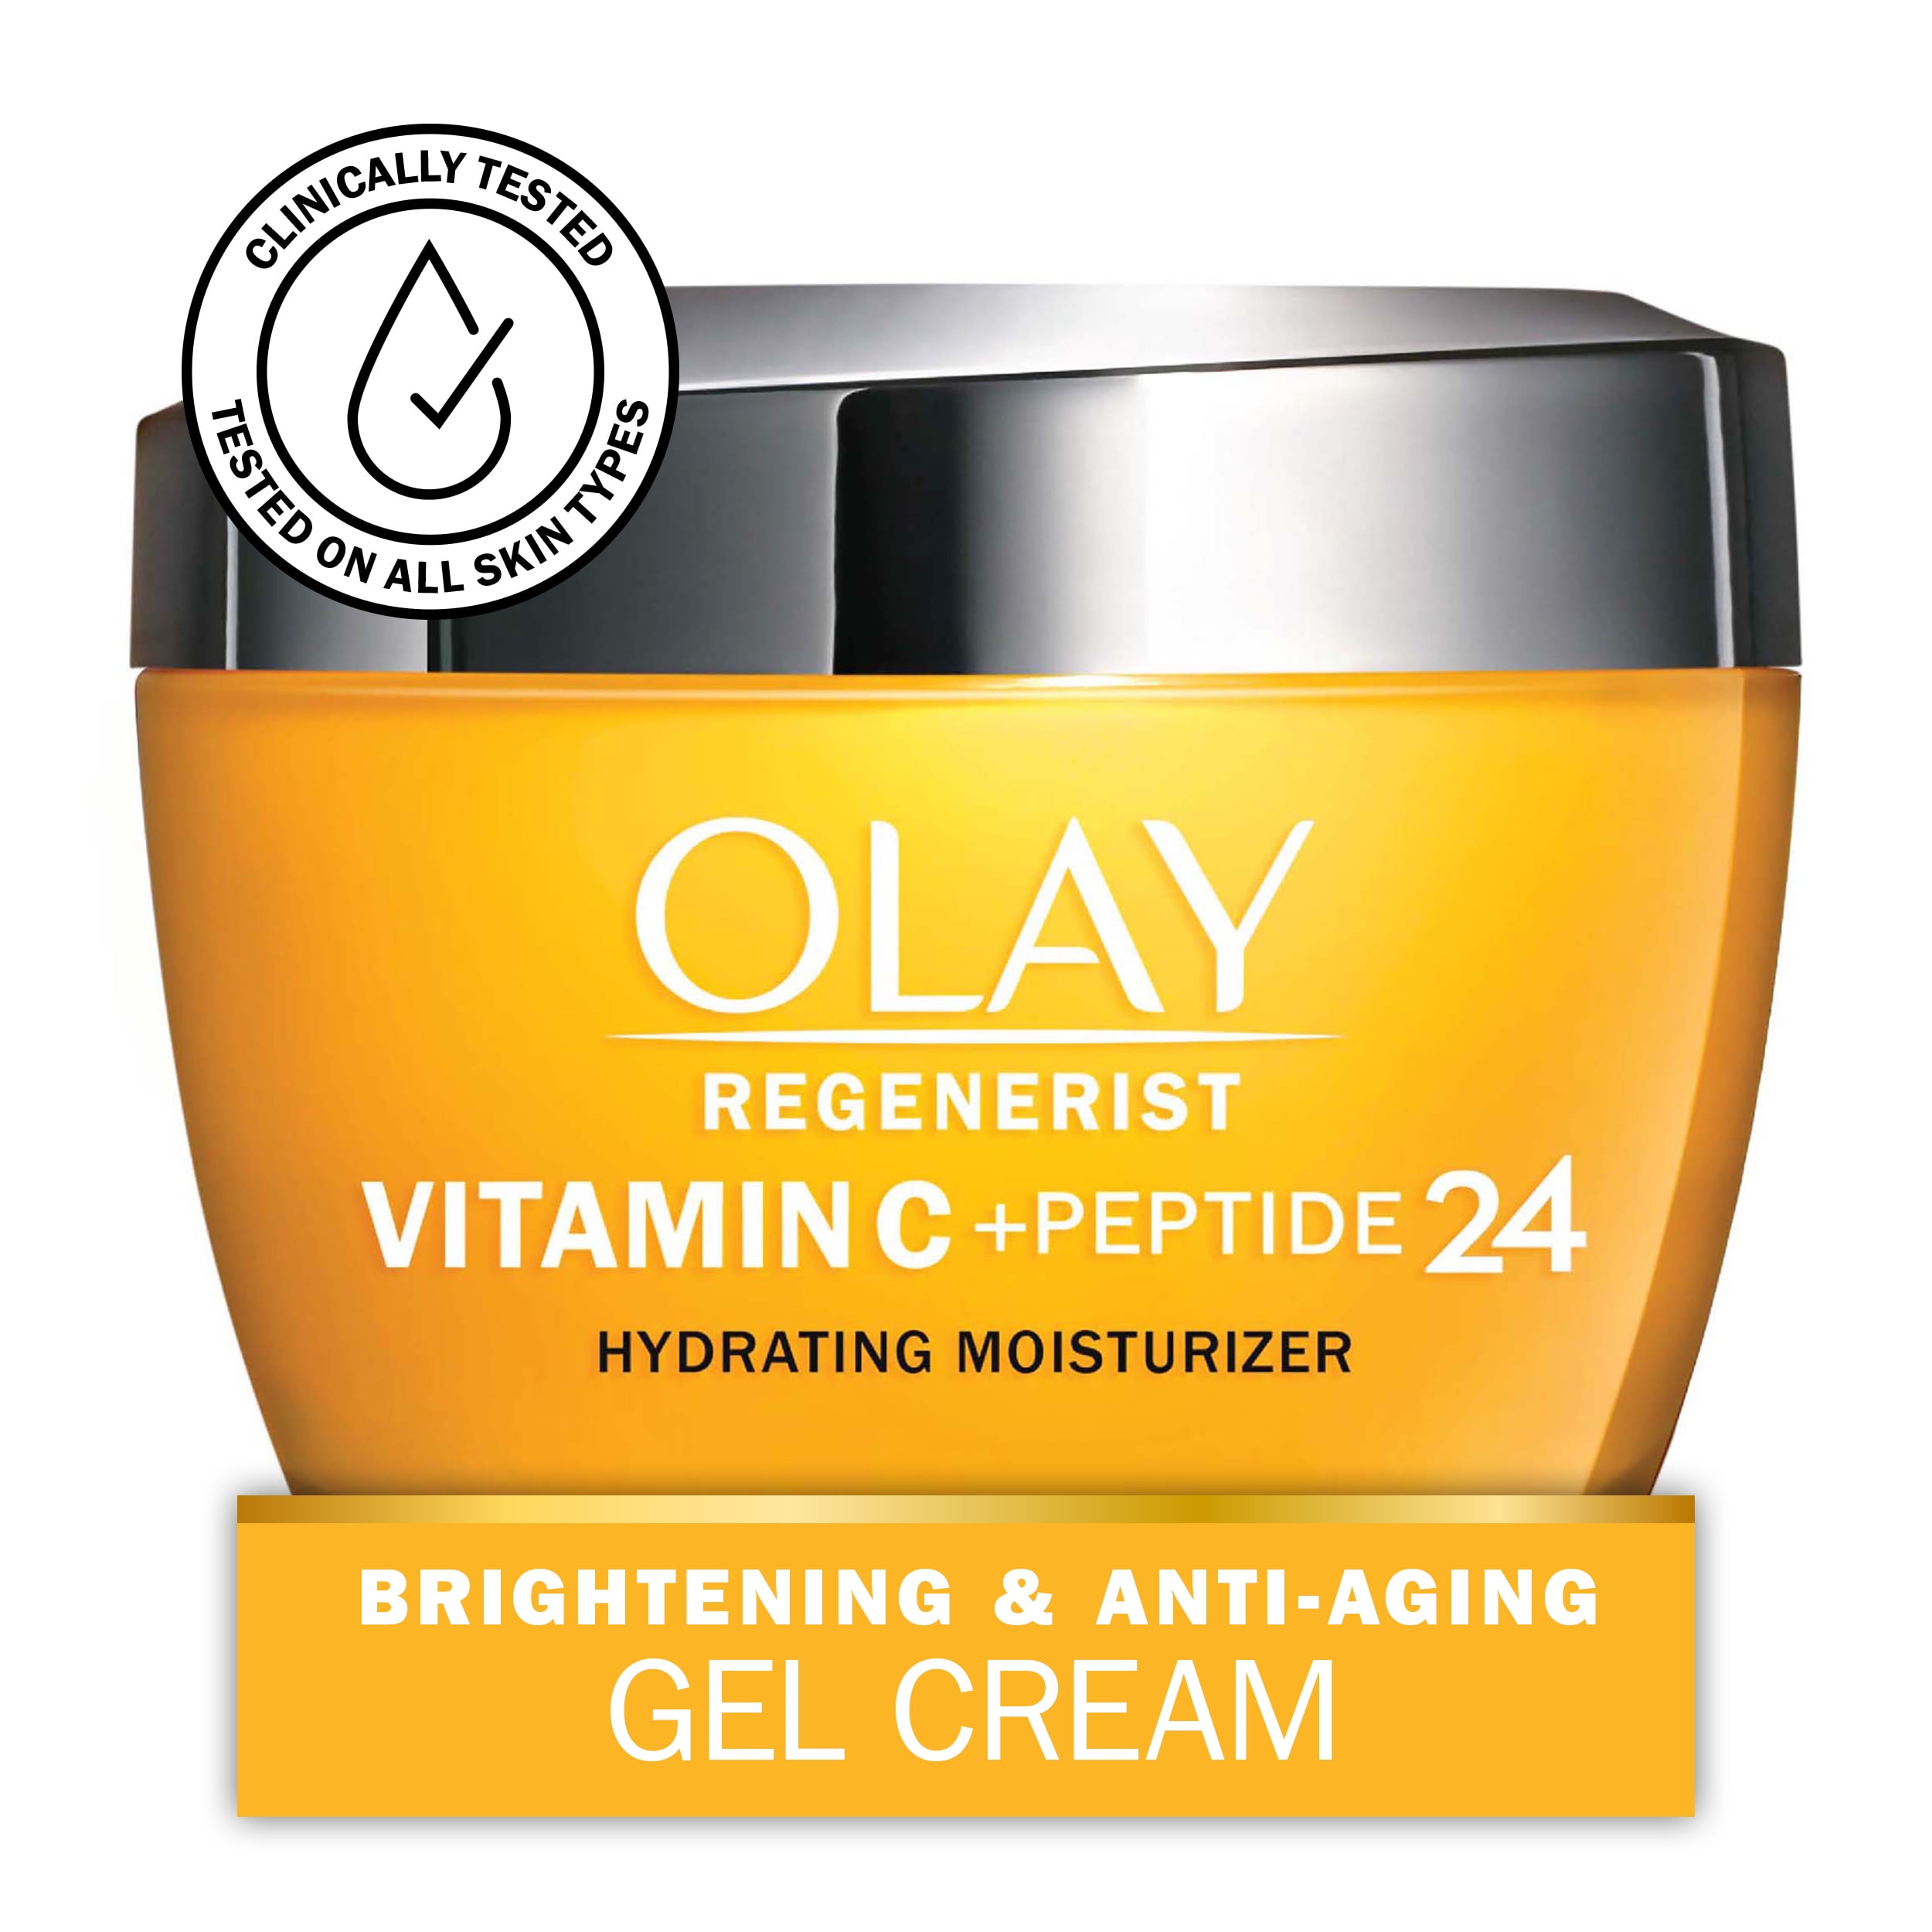 Olay Regenerist Vitamin C Face Moisturizer, Dull Skin Brightening Cream for  All Skin Types, 1.7 oz